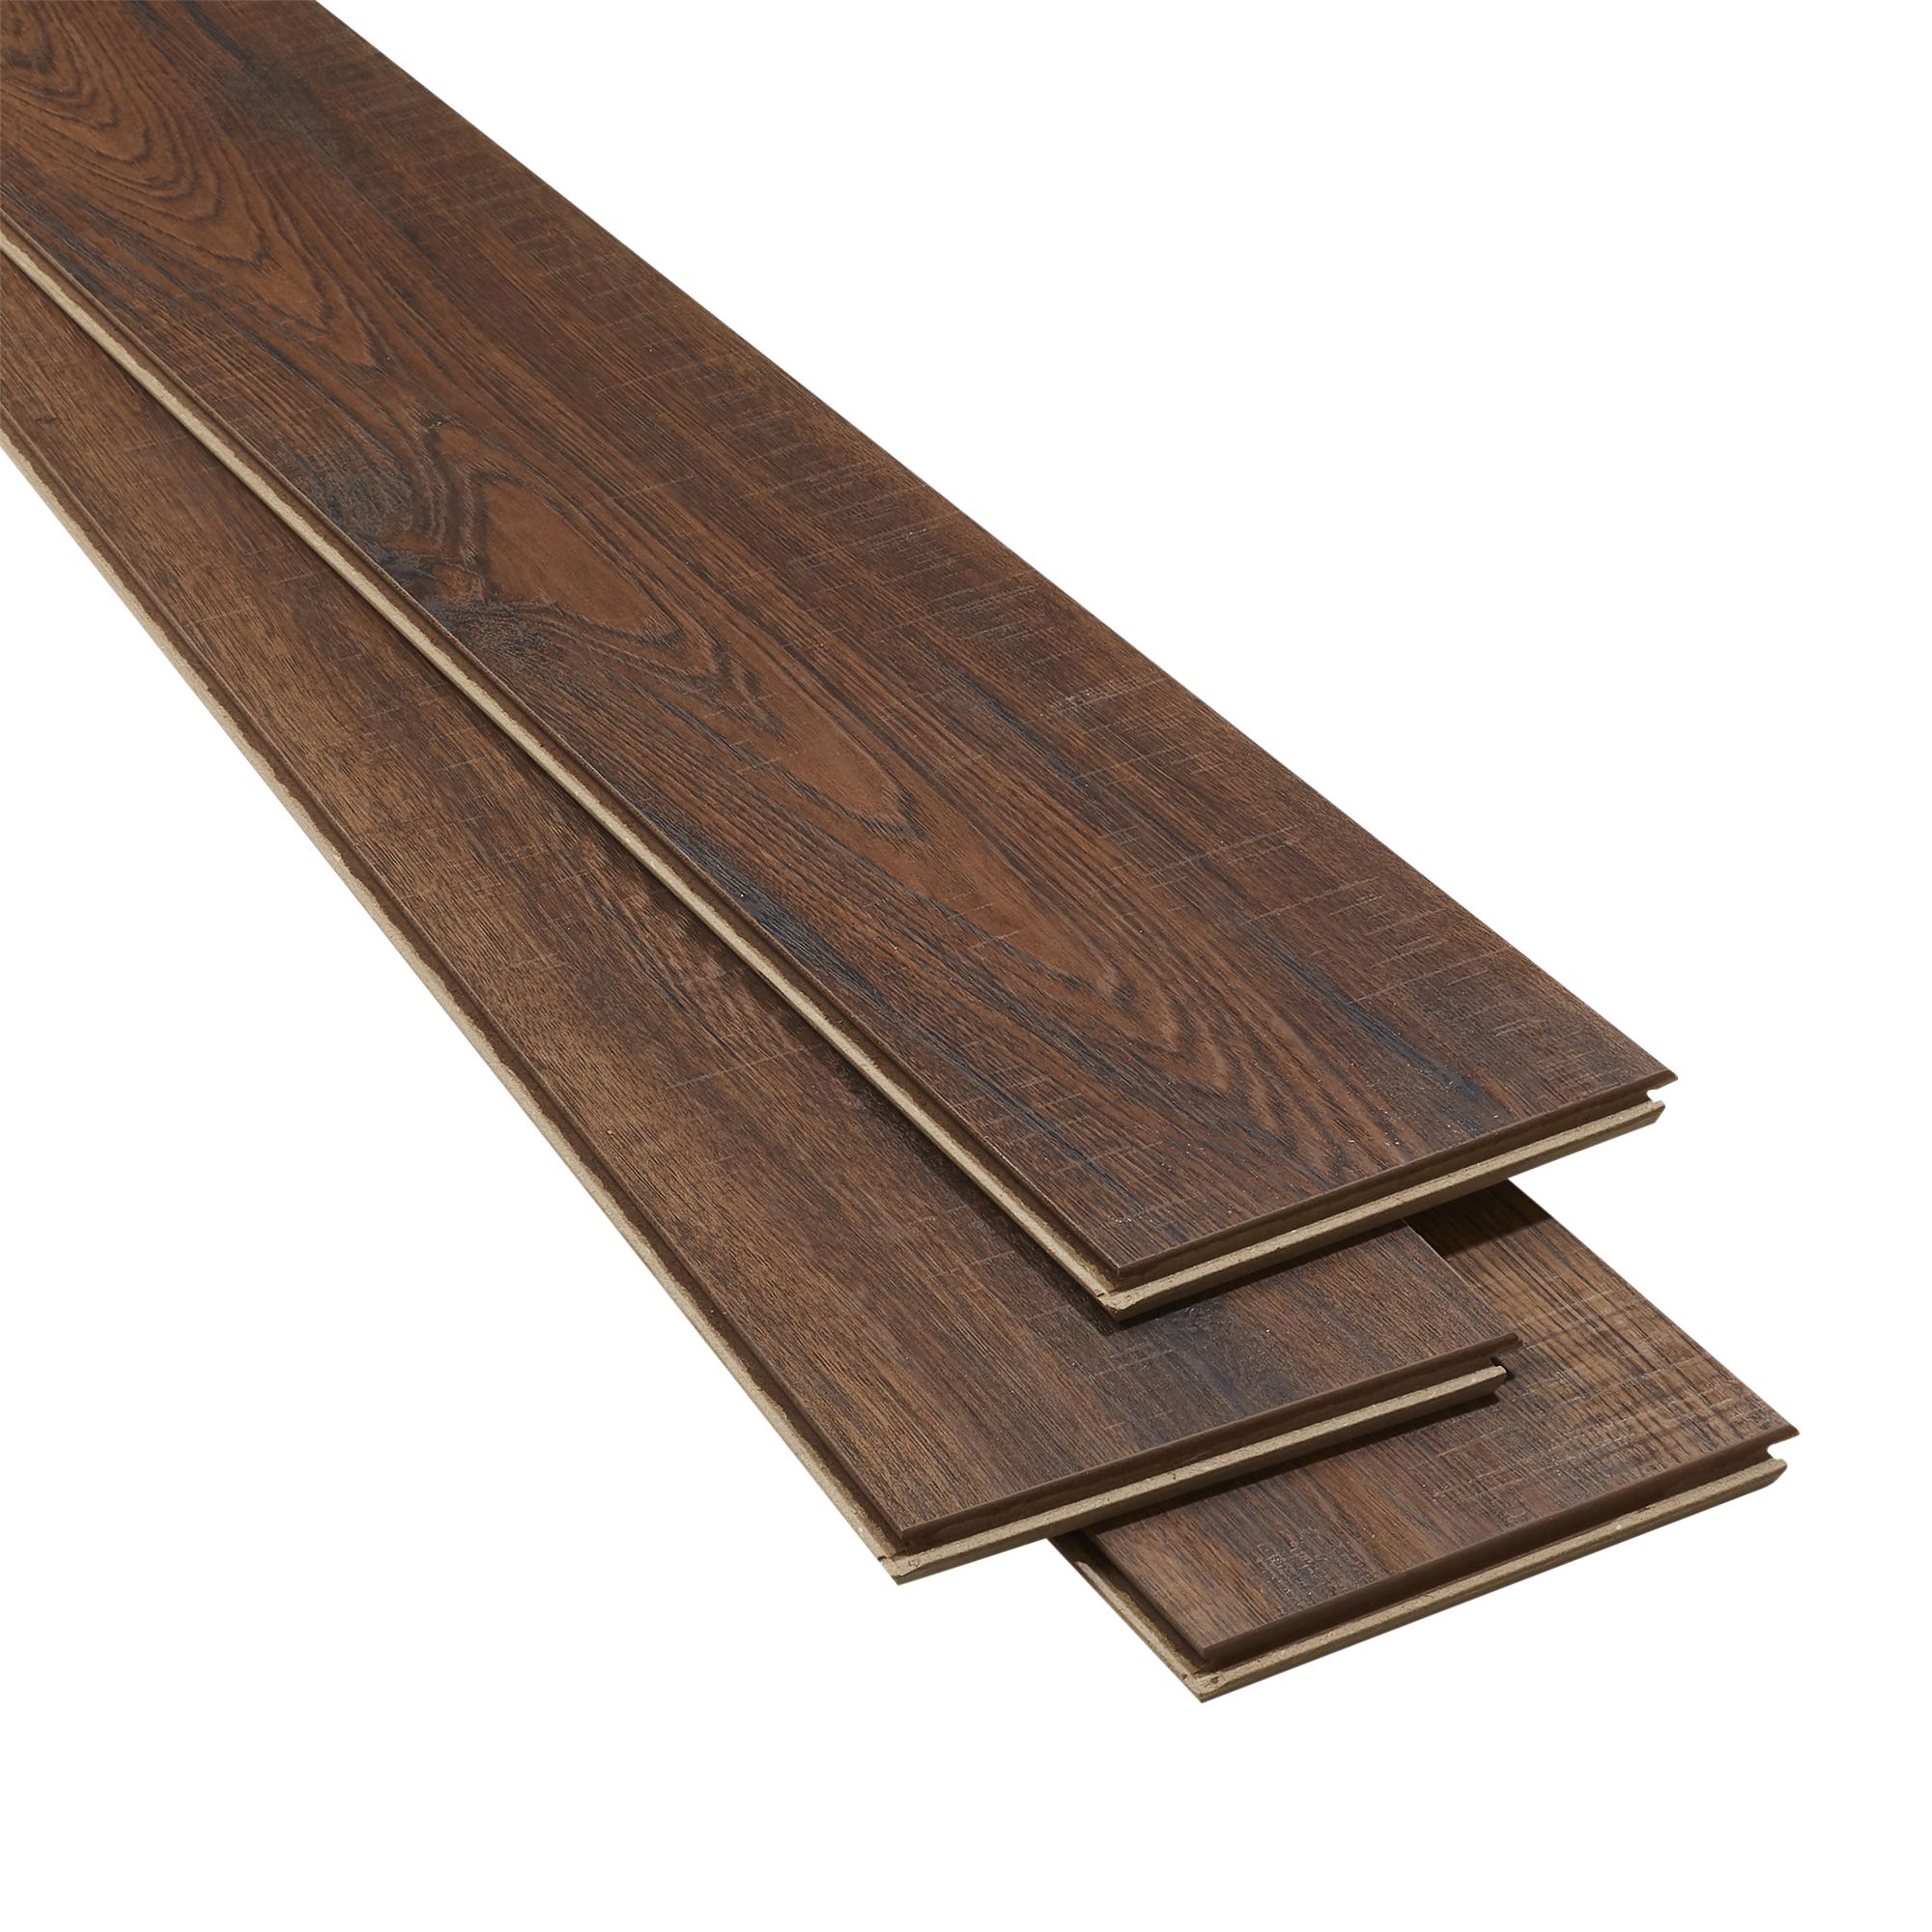 Otley Oak Effect Laminate Flooring Sample~3663602421450 01c Bq?$MOB PREV$&$width=768&$height=768